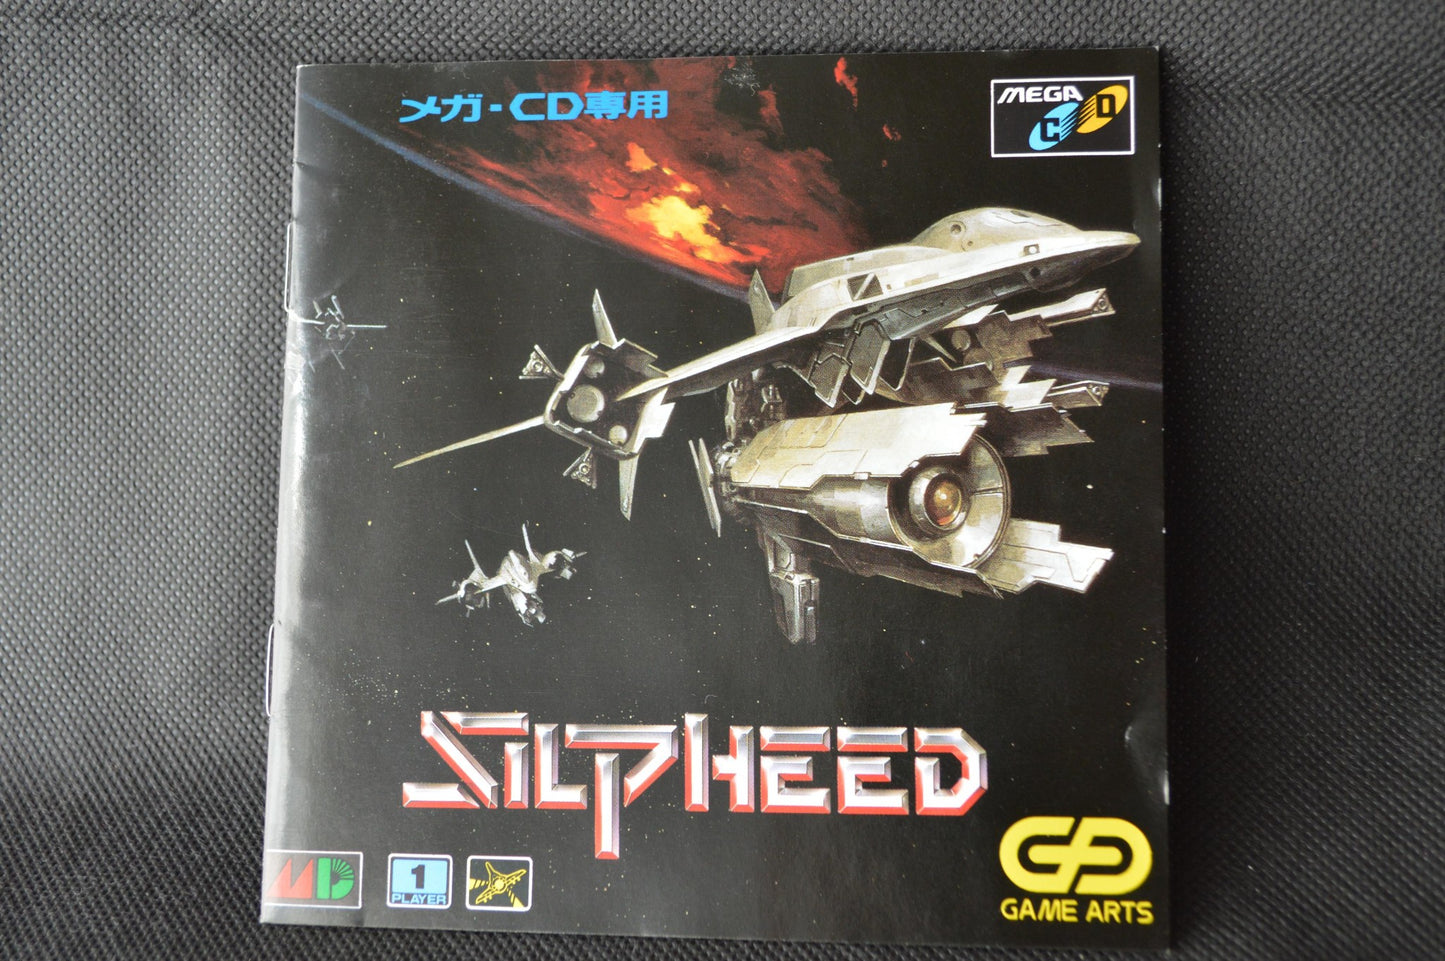 SILPHEED MEGA CD MCD game Disk, Manual, Box set, Working -f1114-